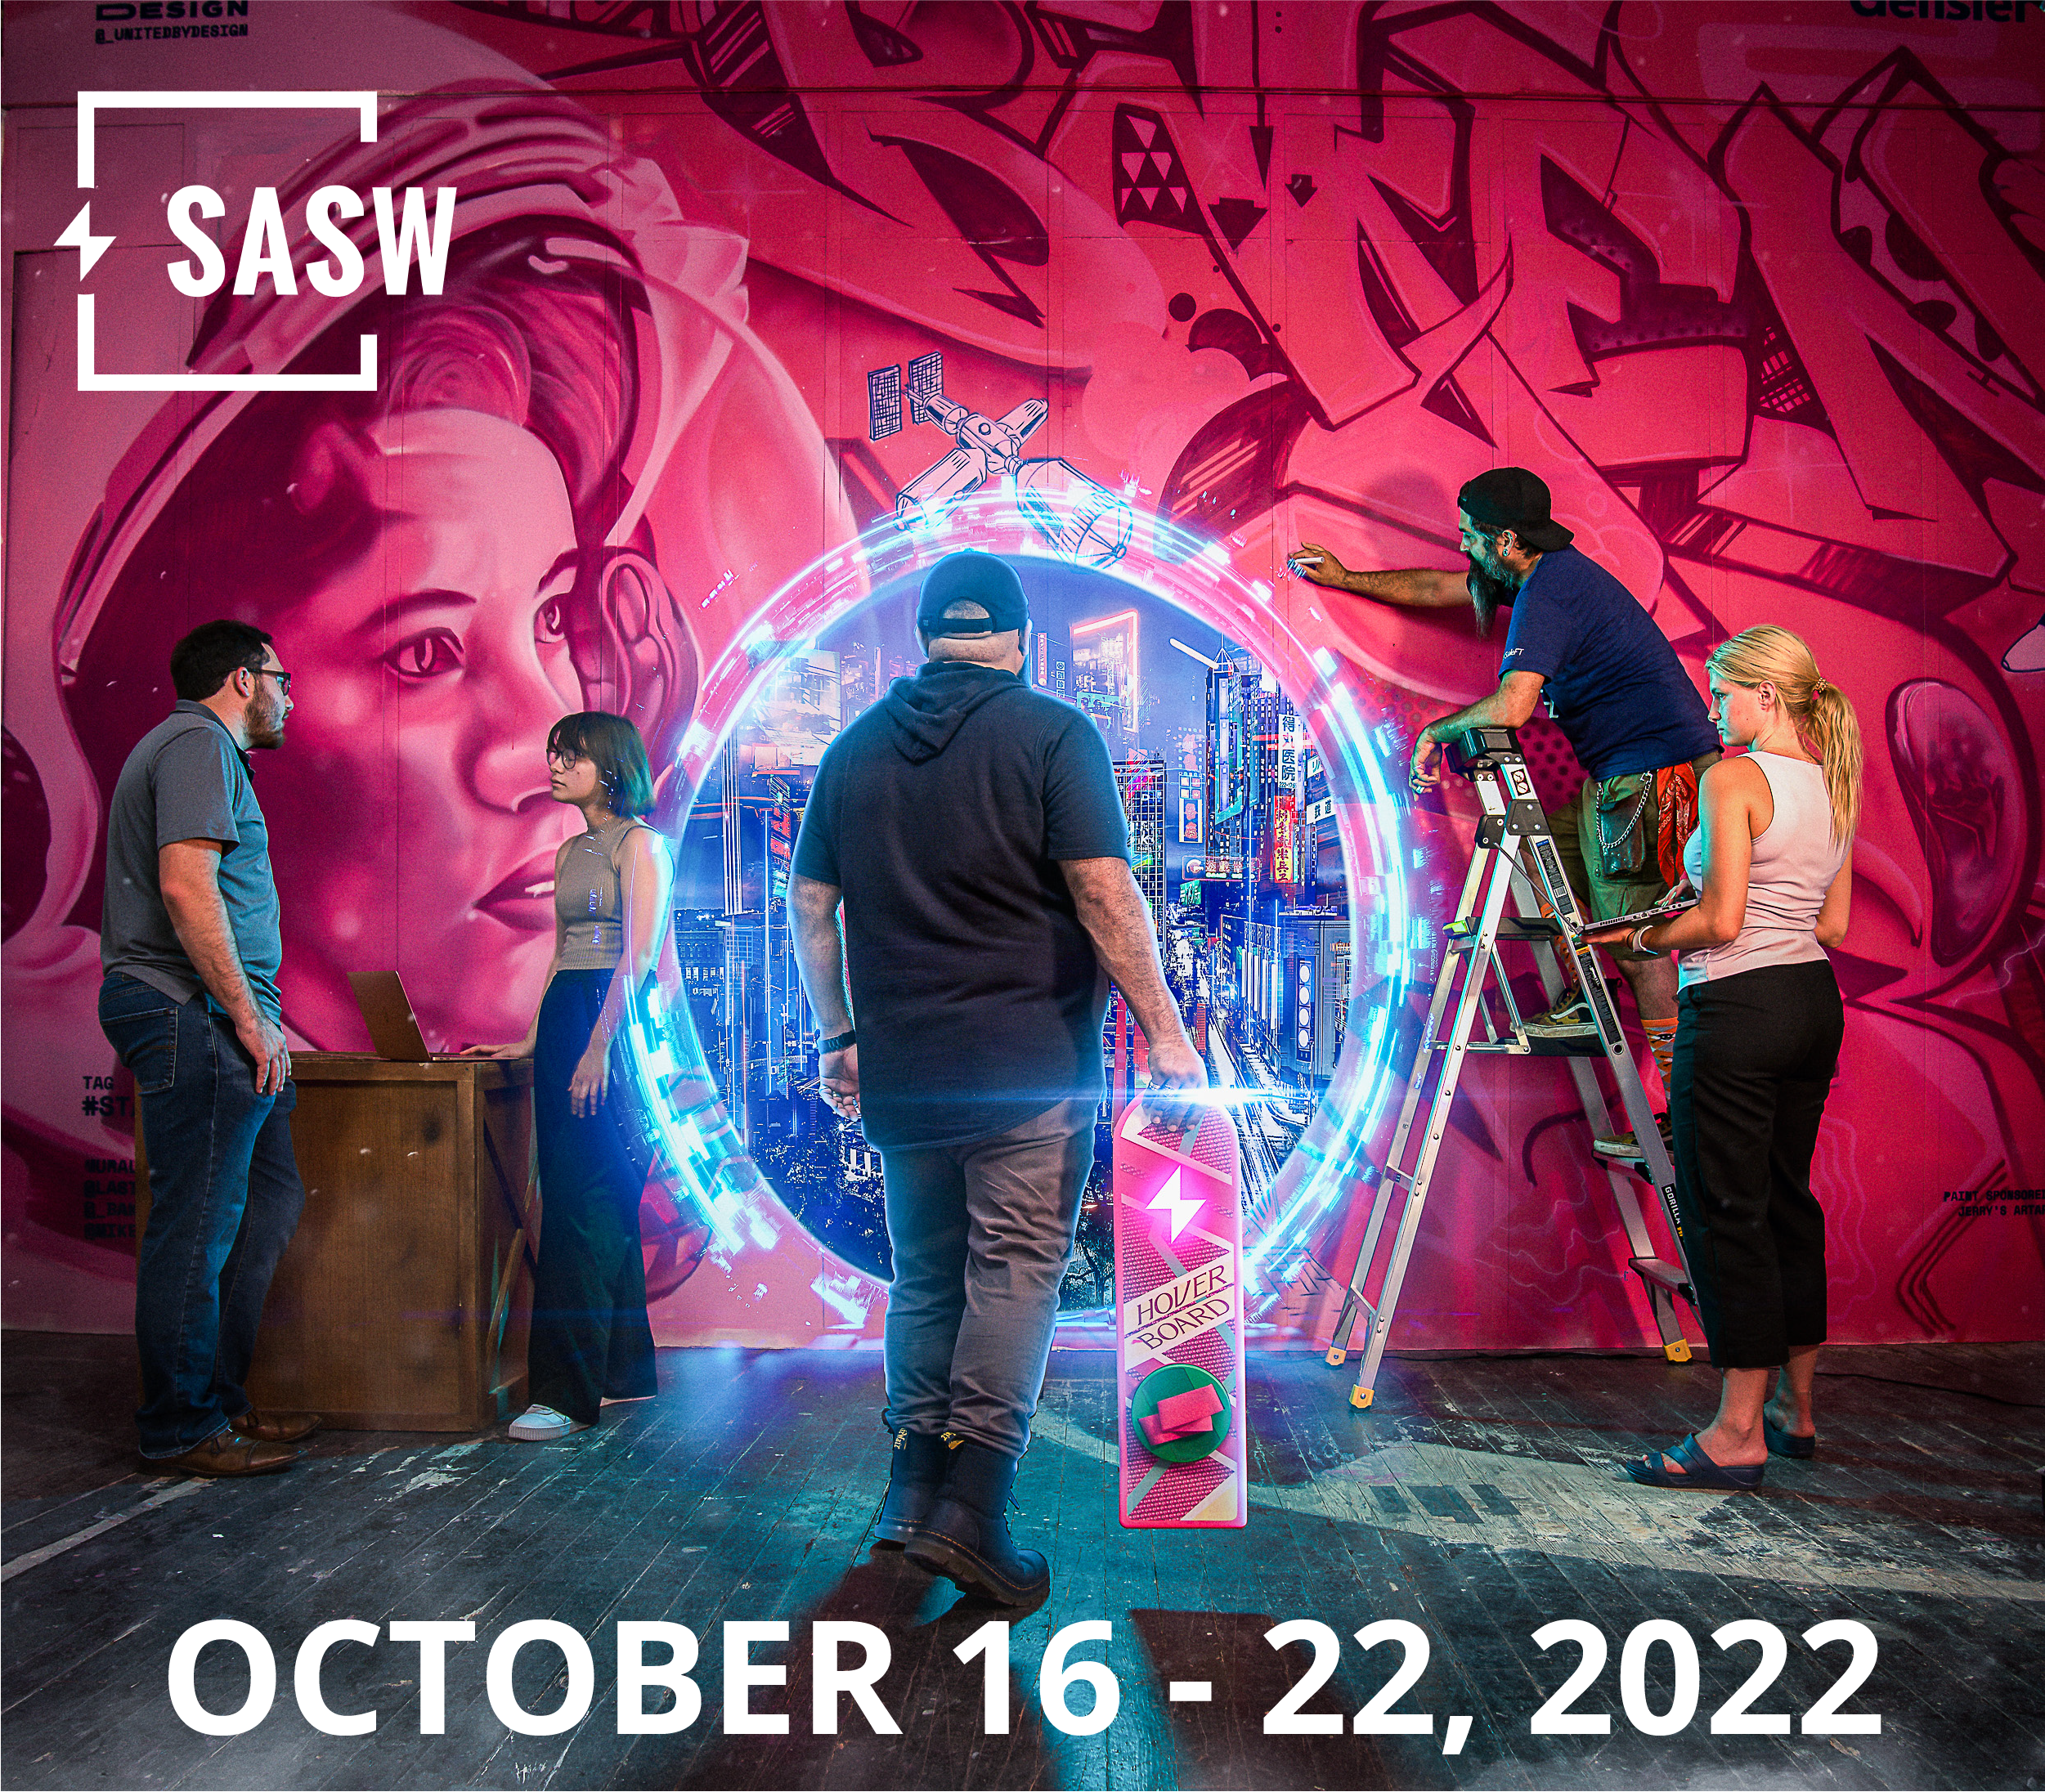 SASW 2022 Music EXP and Art Exhibition @ La Zona Cultural - 2022